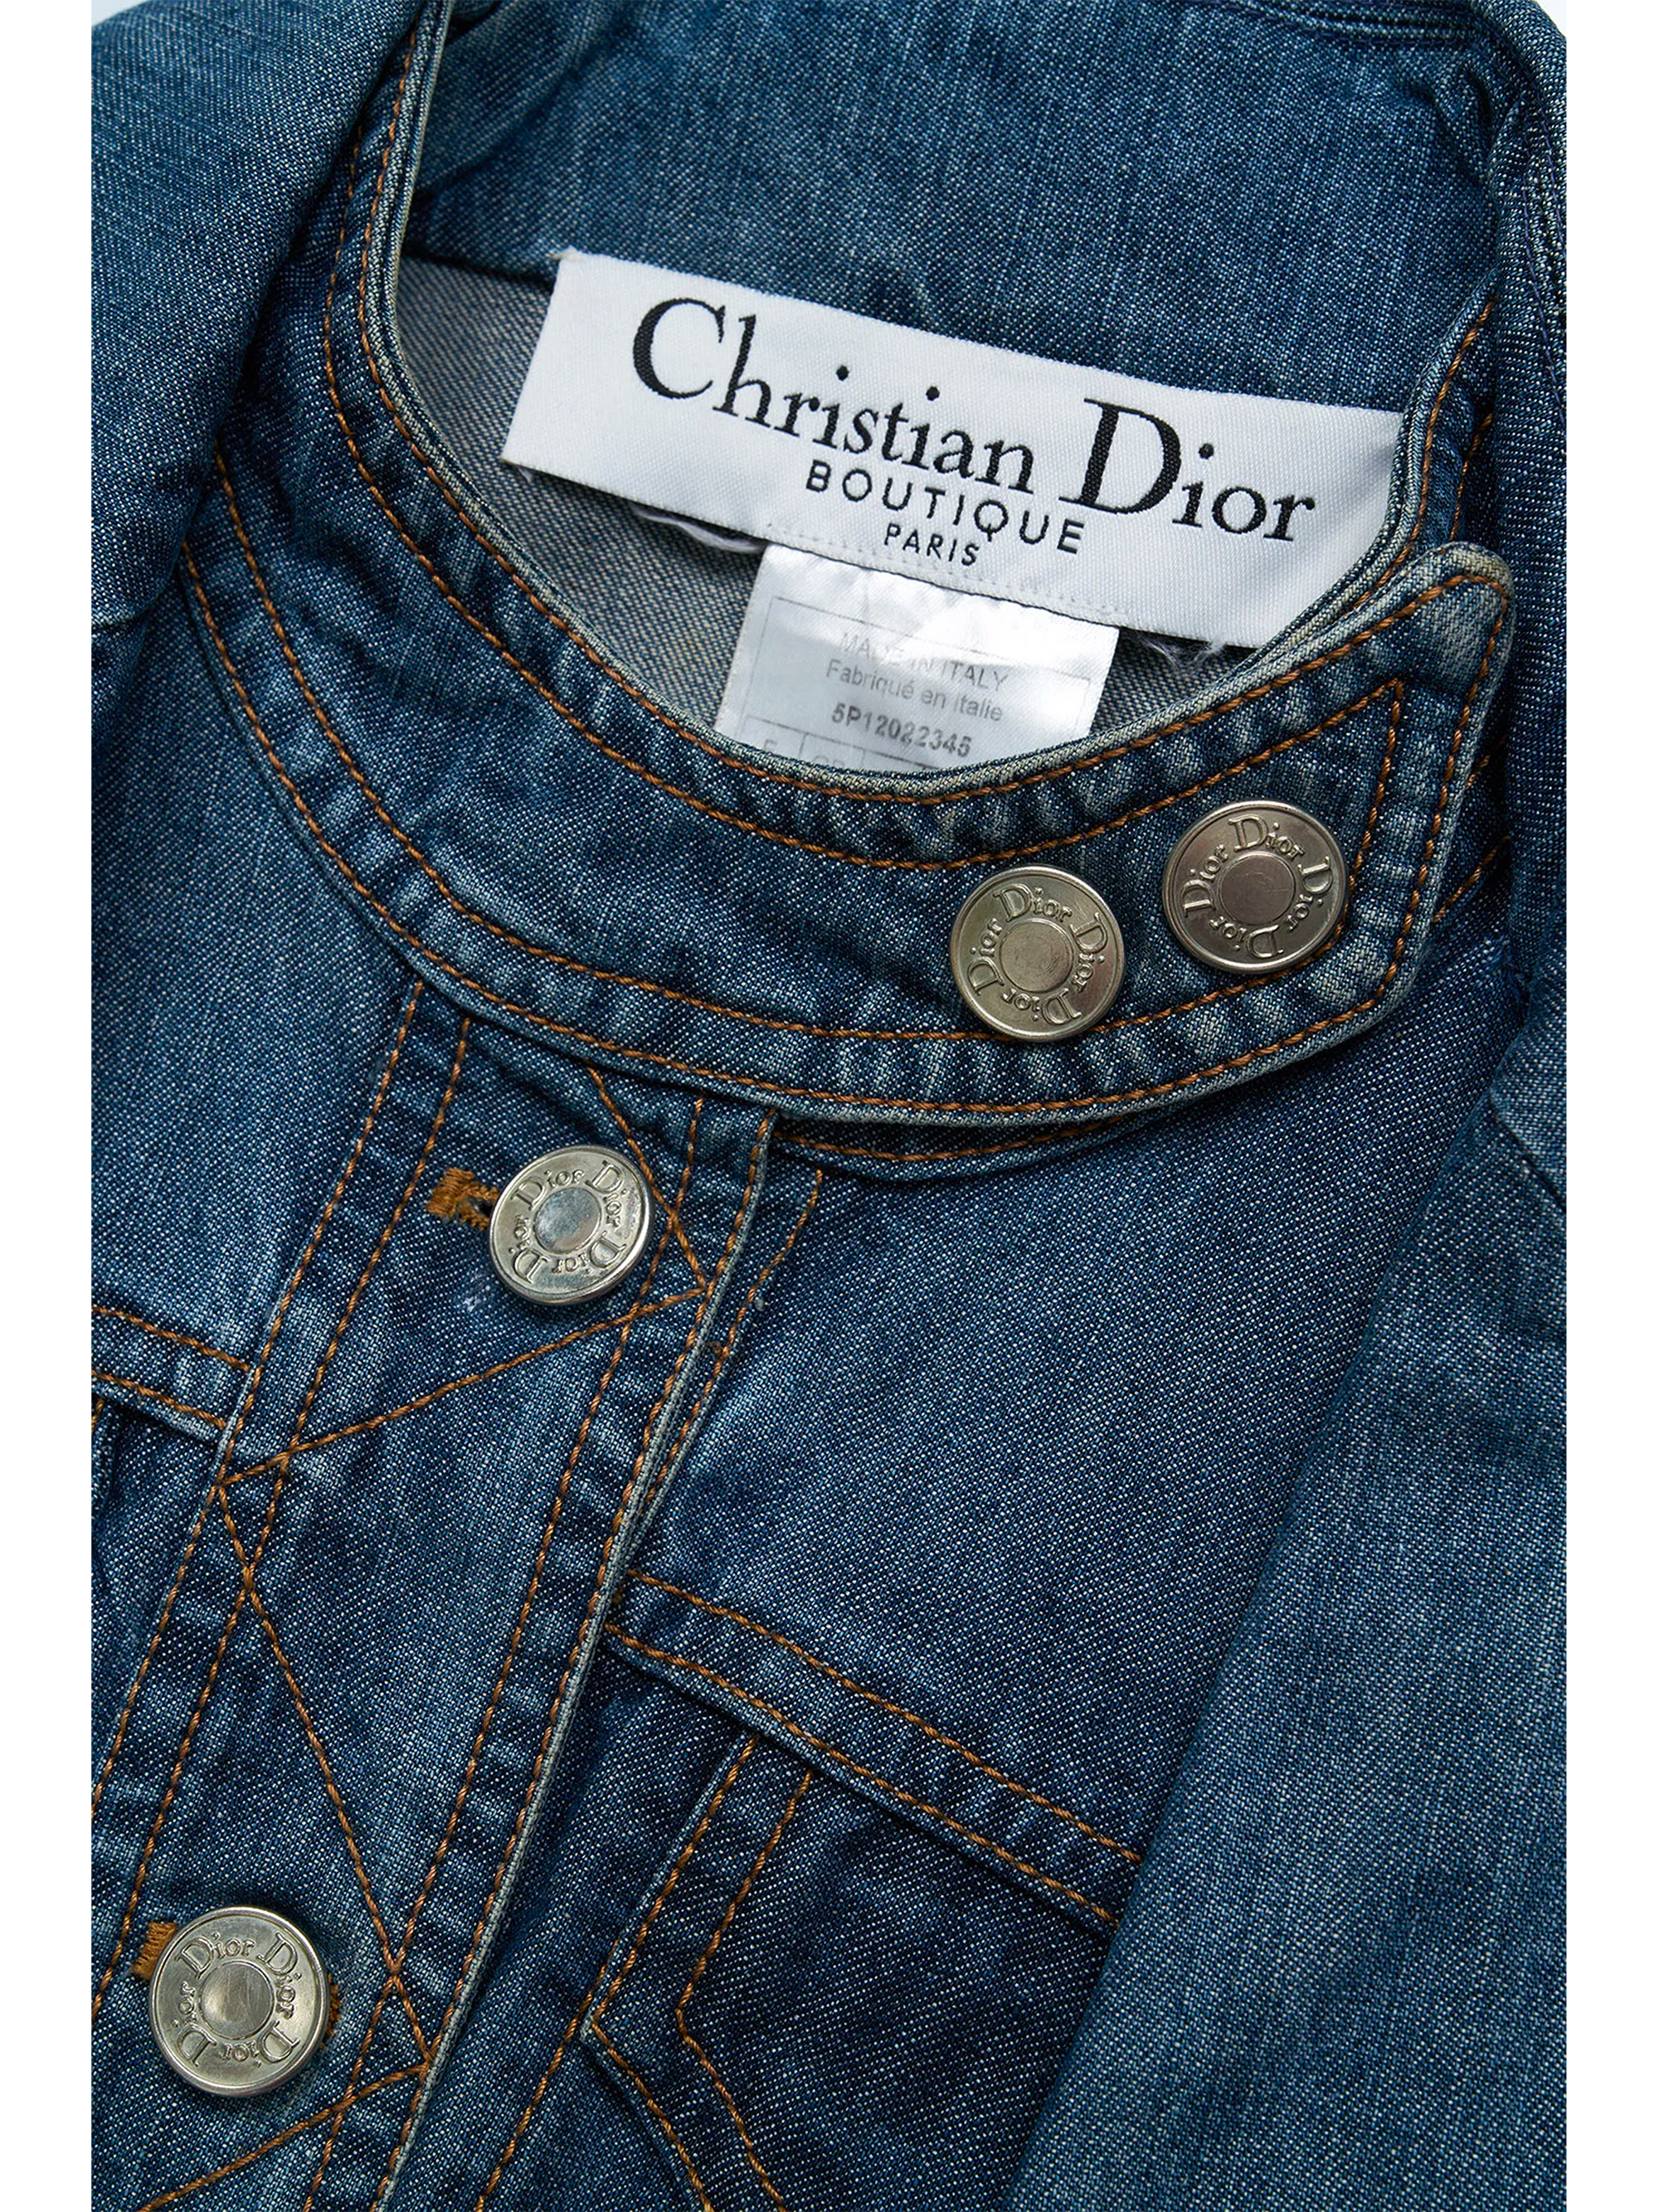 Christian Dior by John Galliano Spring 2005 Denim Blazer